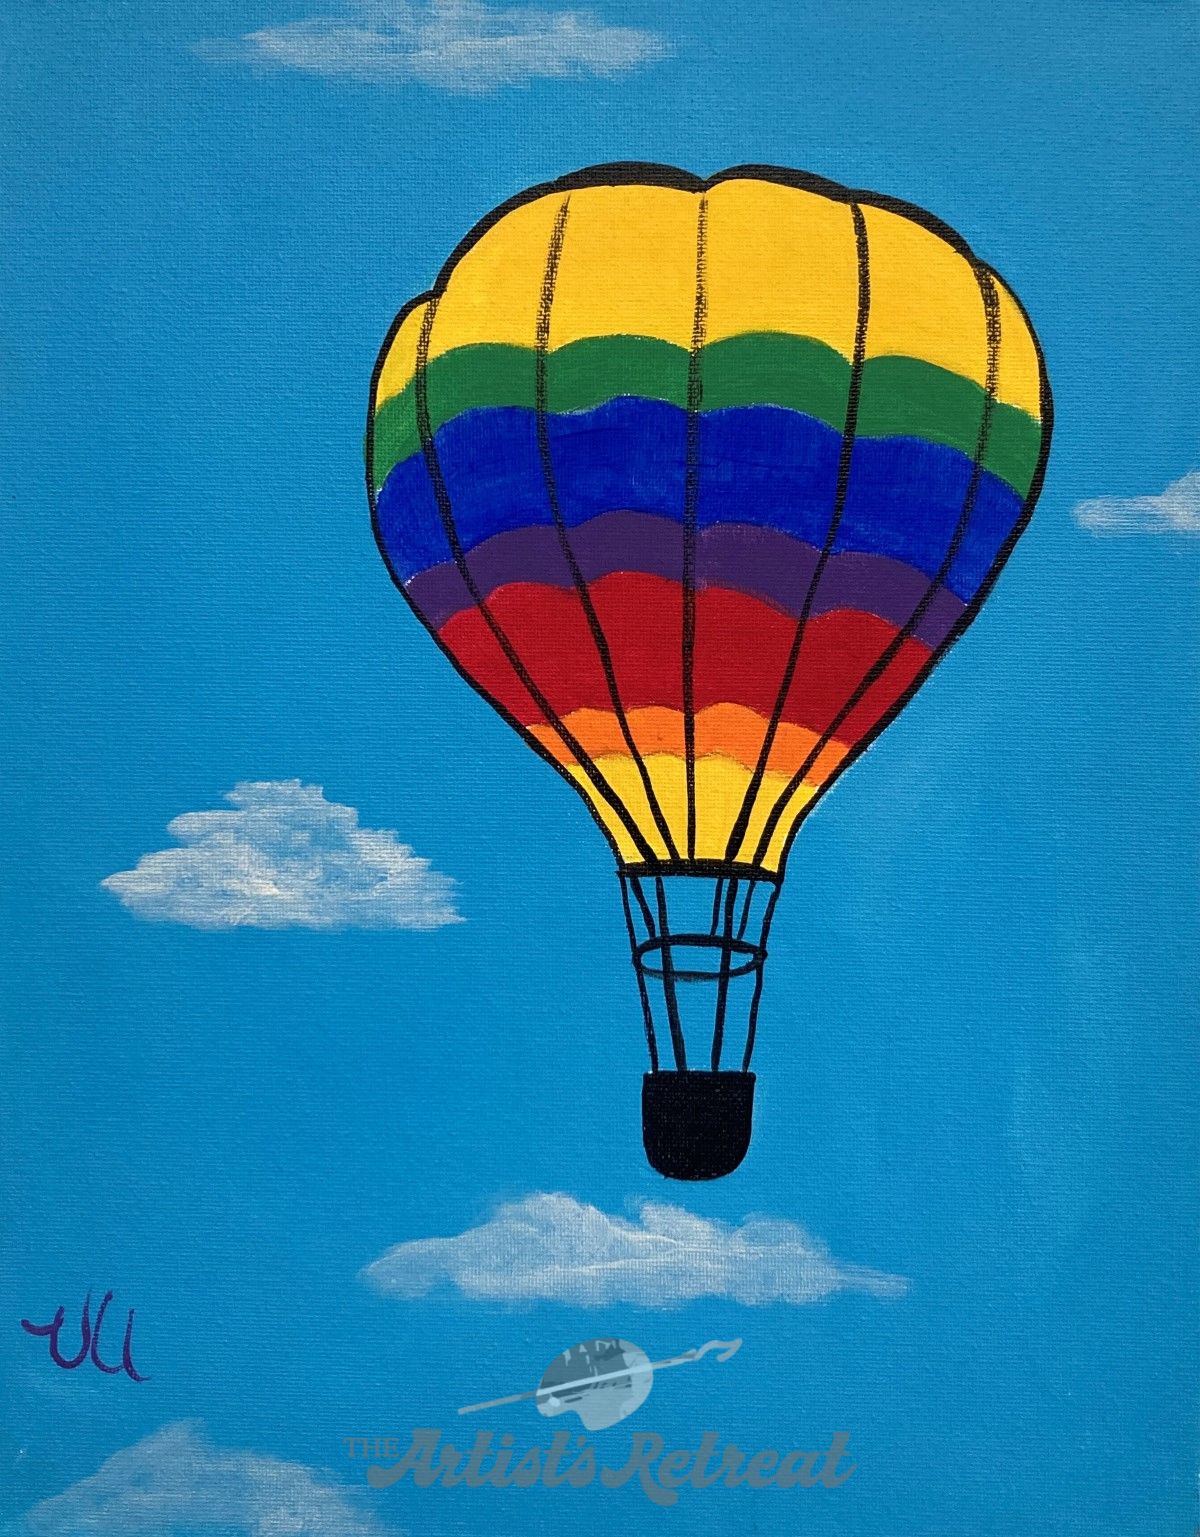 Wally the Hot Air Balloon - The Artist's Retreat